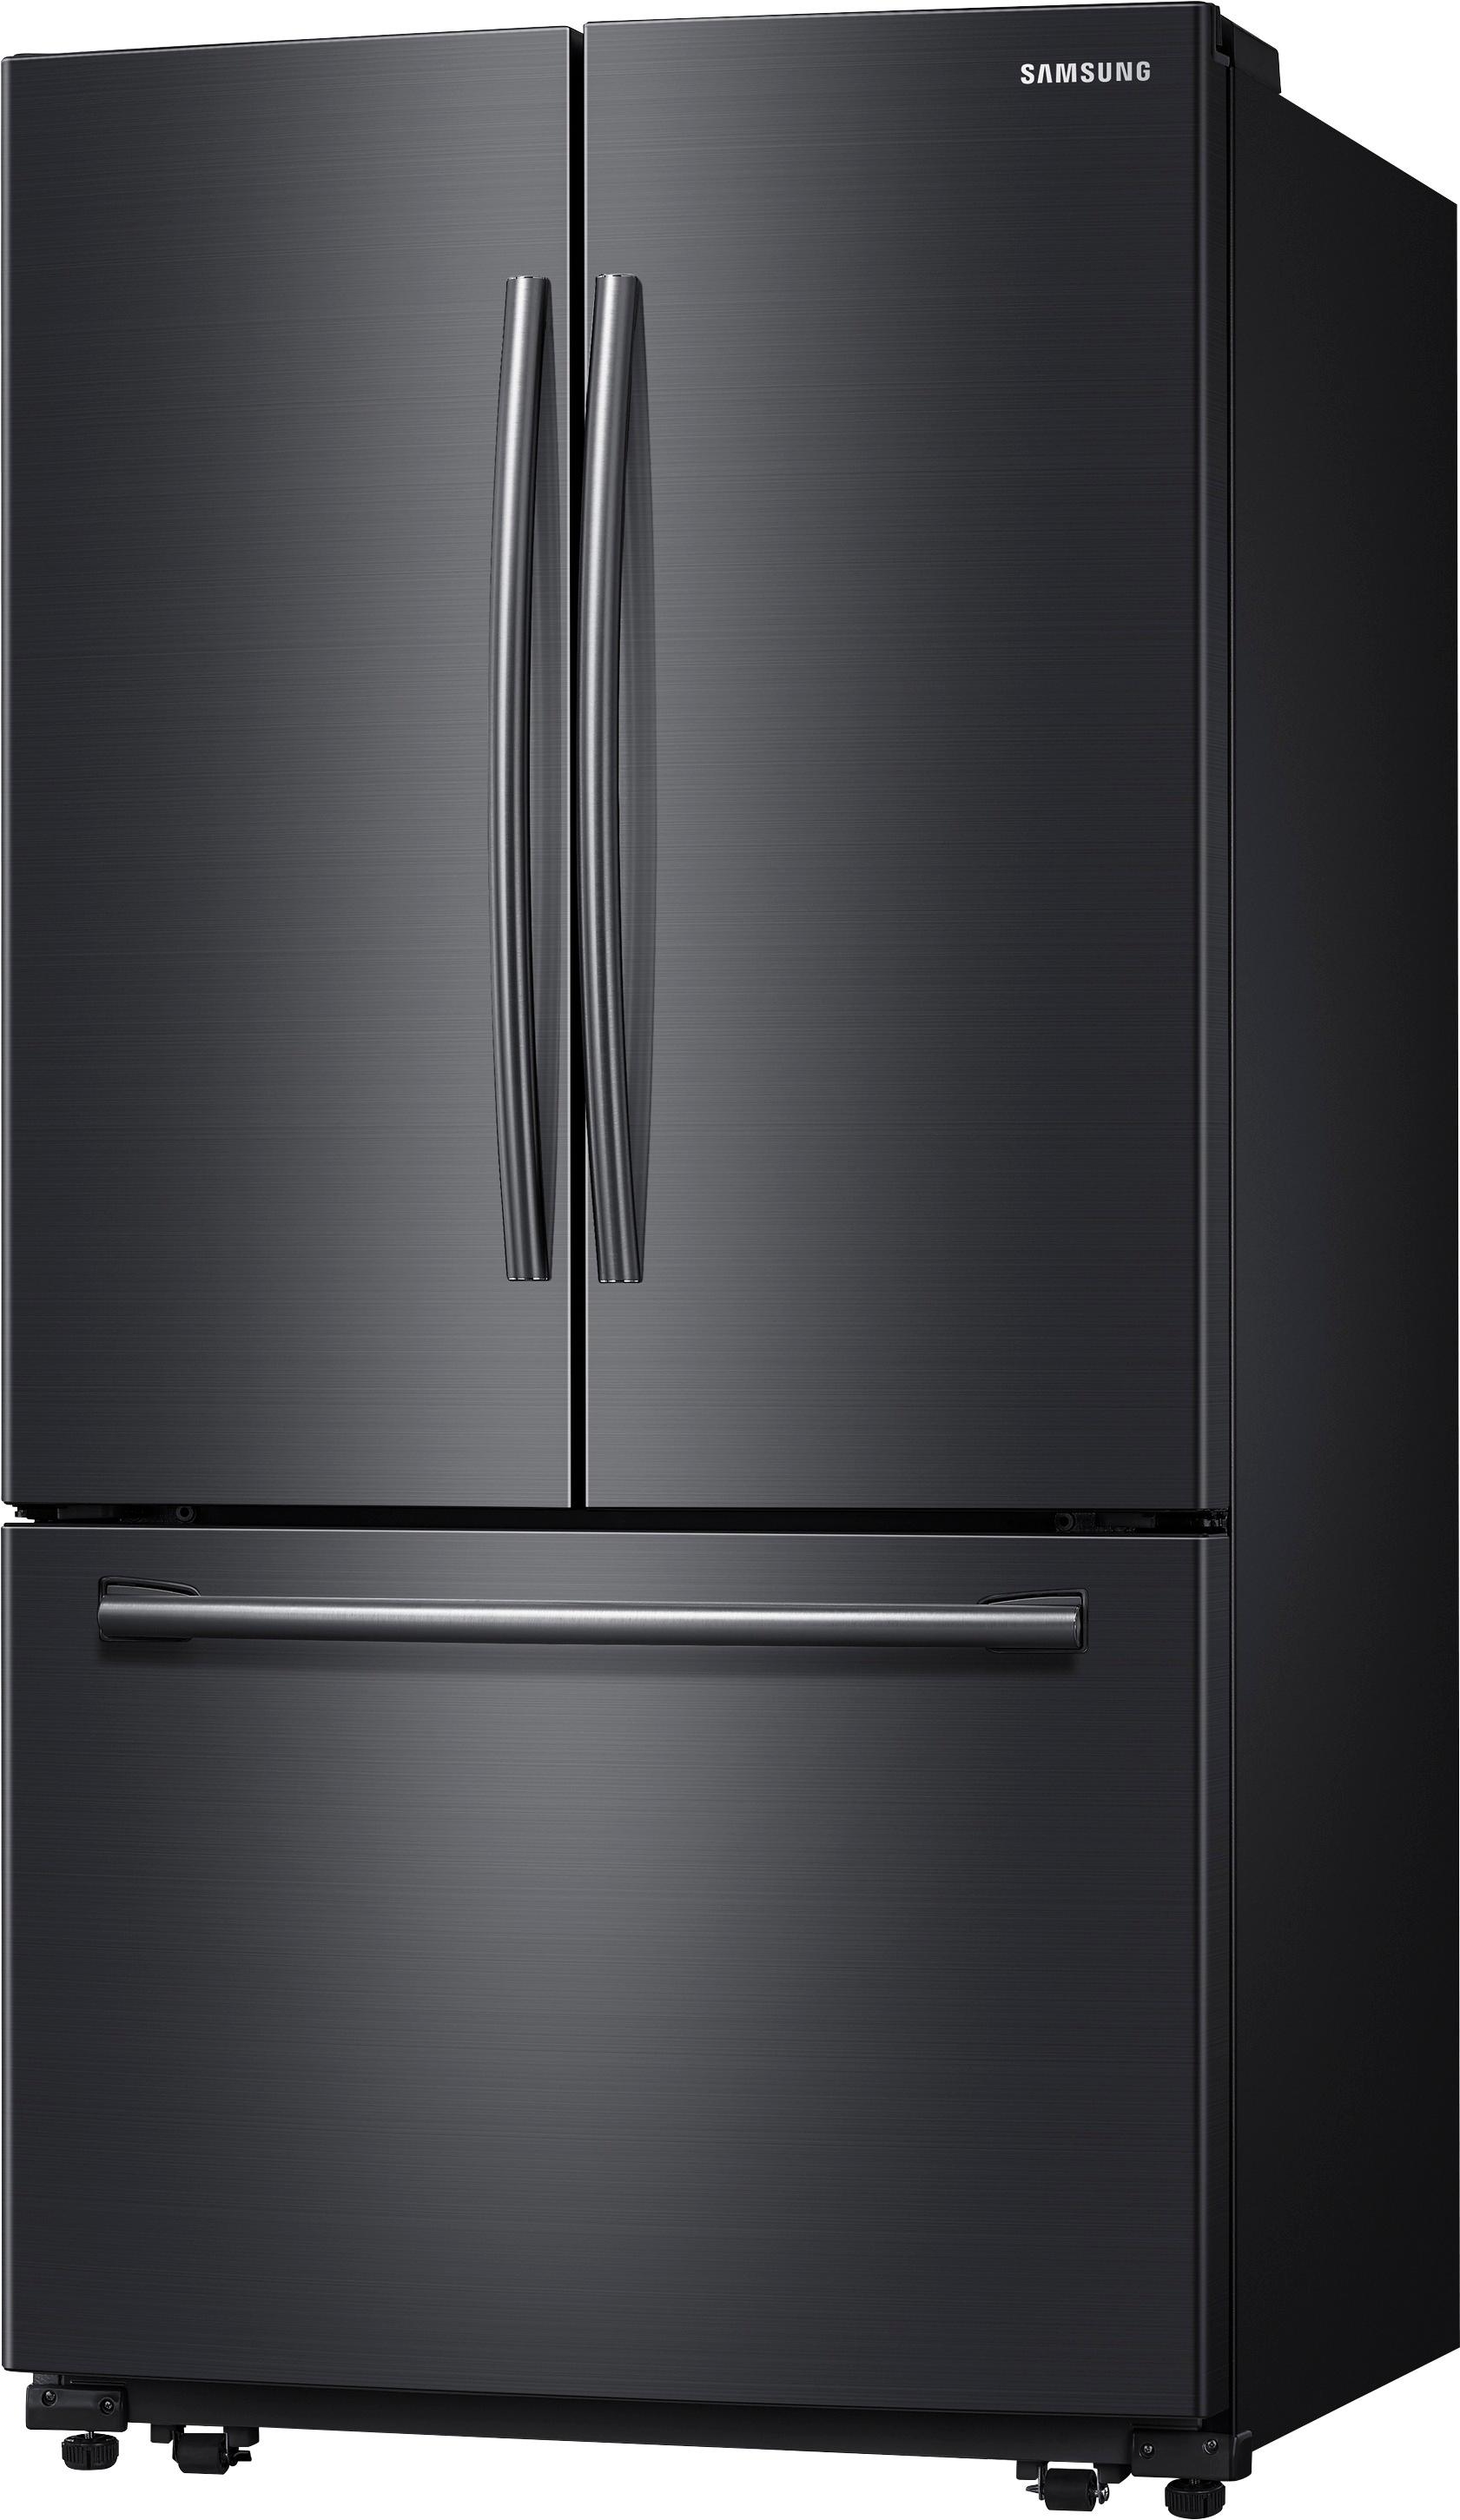 Left View: Samsung - 25.5 Cu. Ft. French Door Fingerprint Resistant Refrigerator with Internal Water Dispenser - Black stainless steel